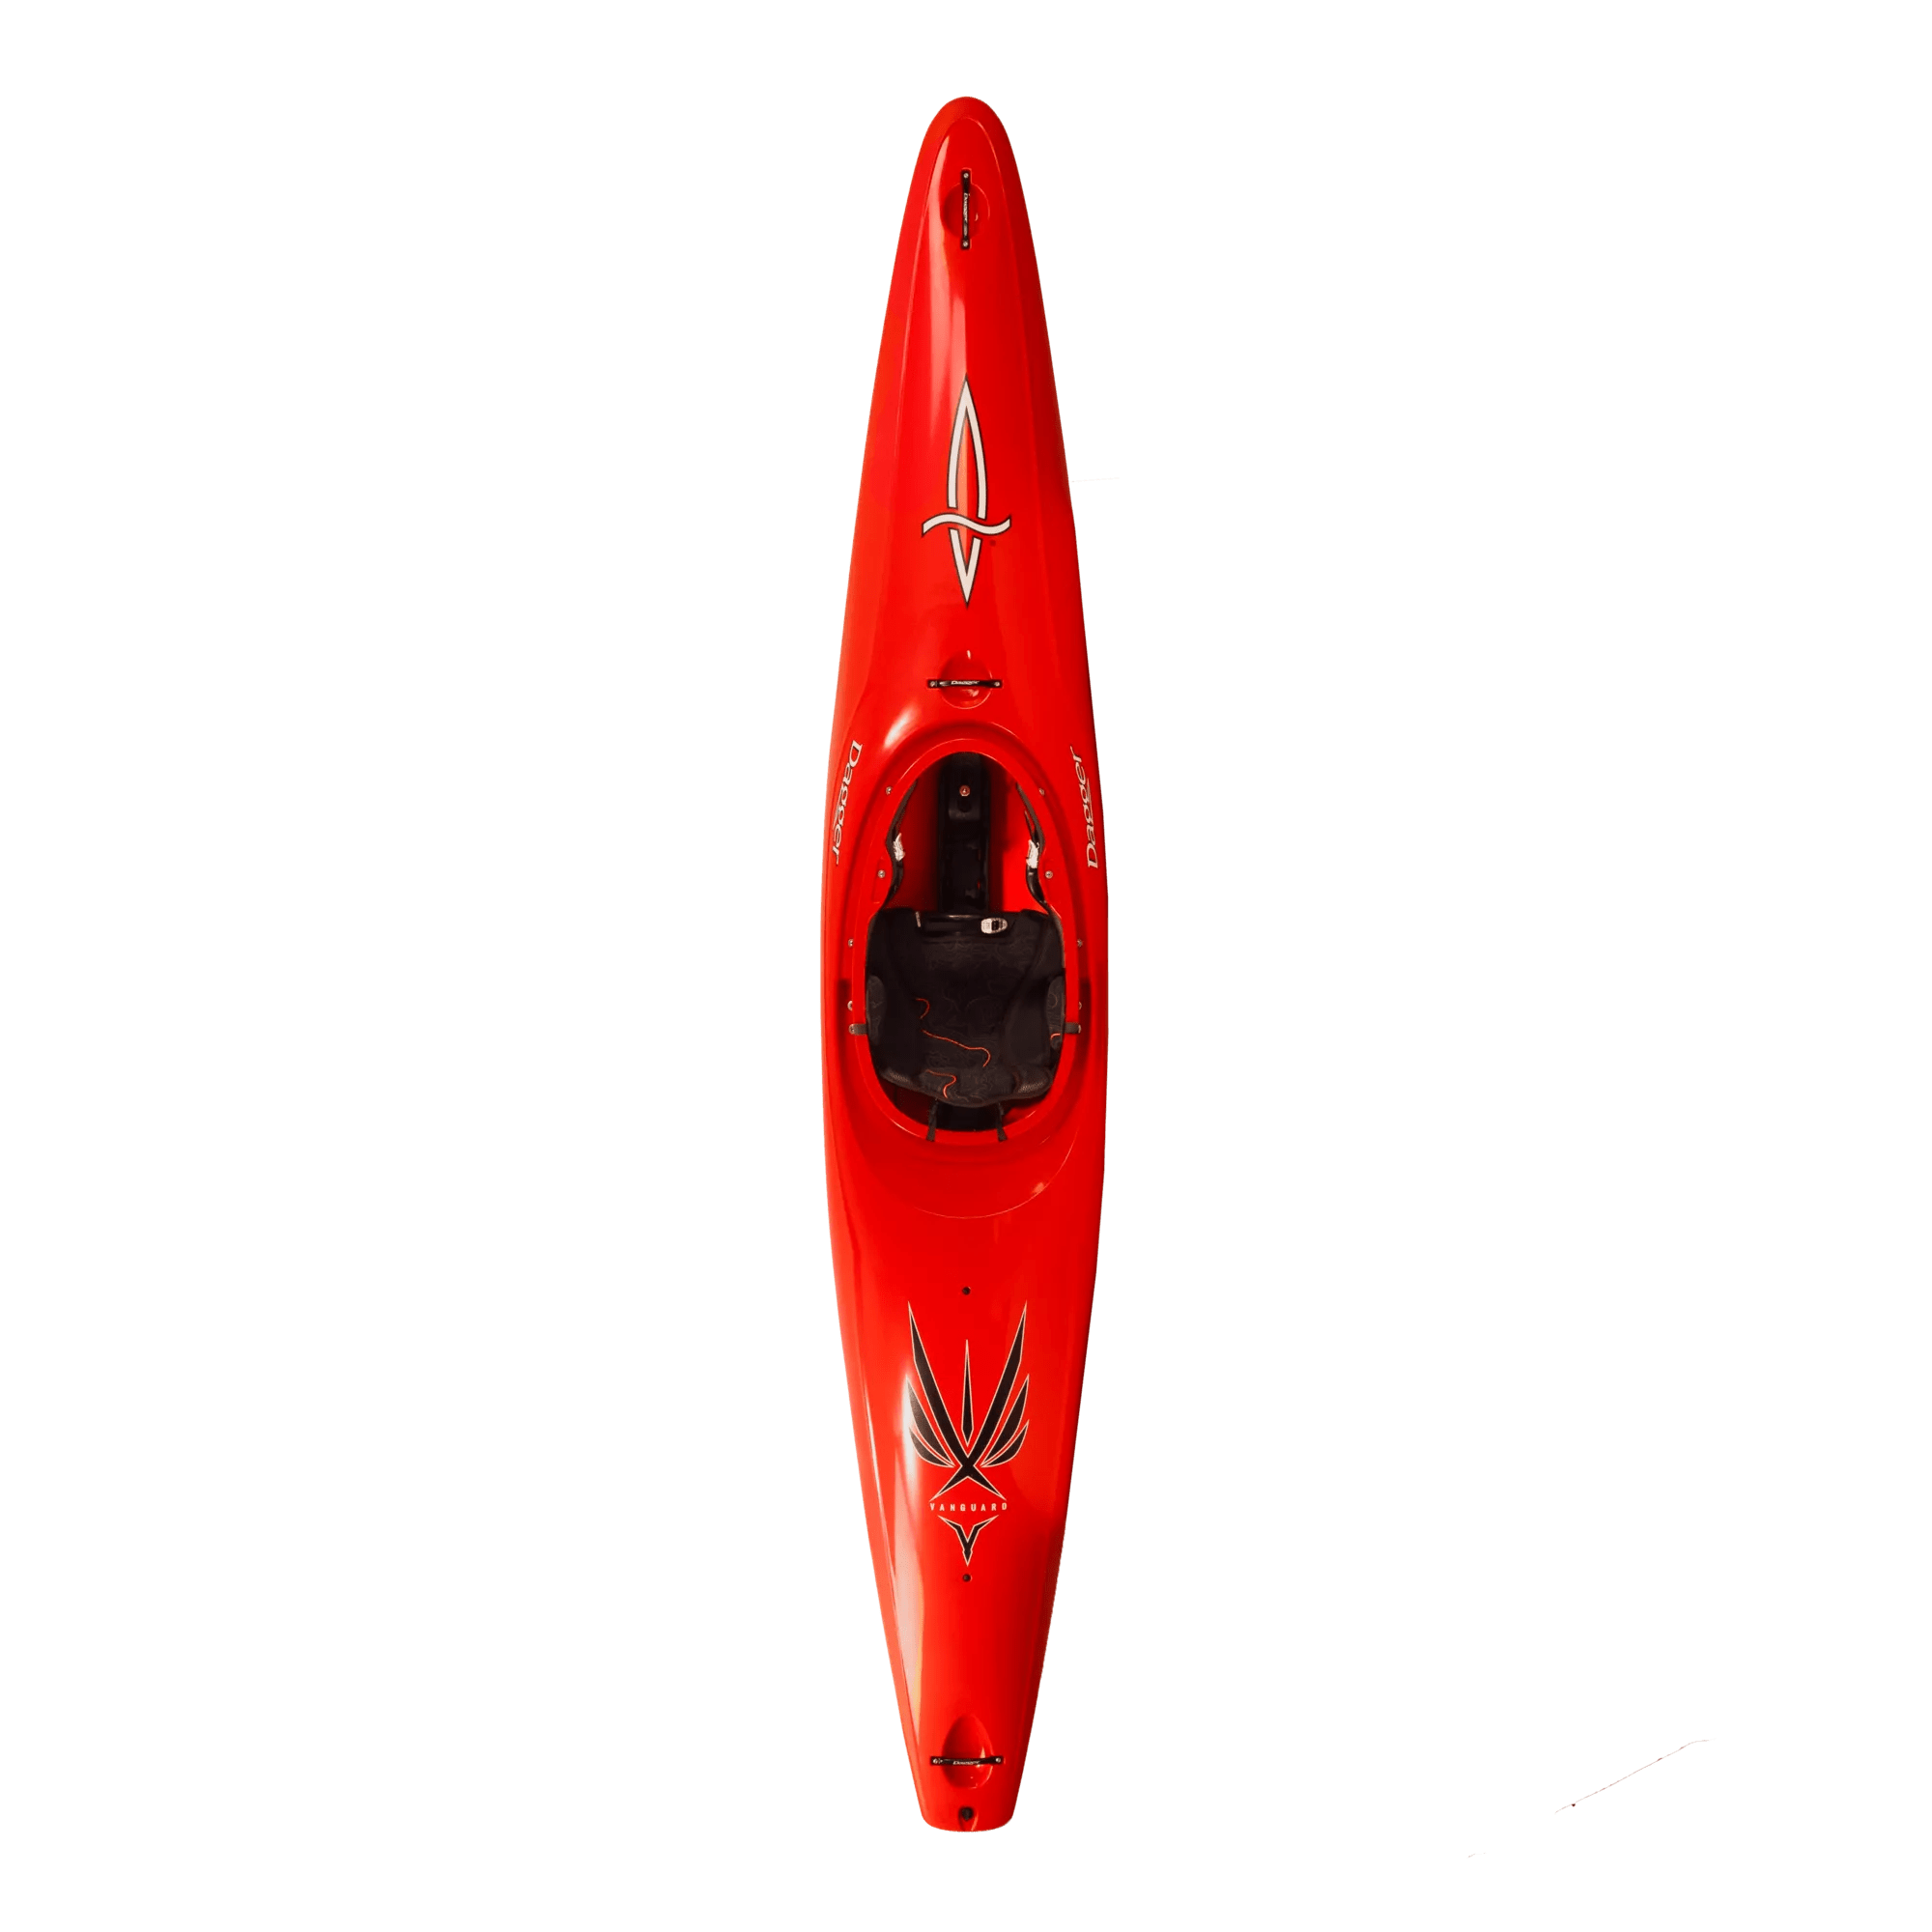 DAGGER - Vanguard 12.0 River Running White Water Kayak -  - 9010963057 - TOP